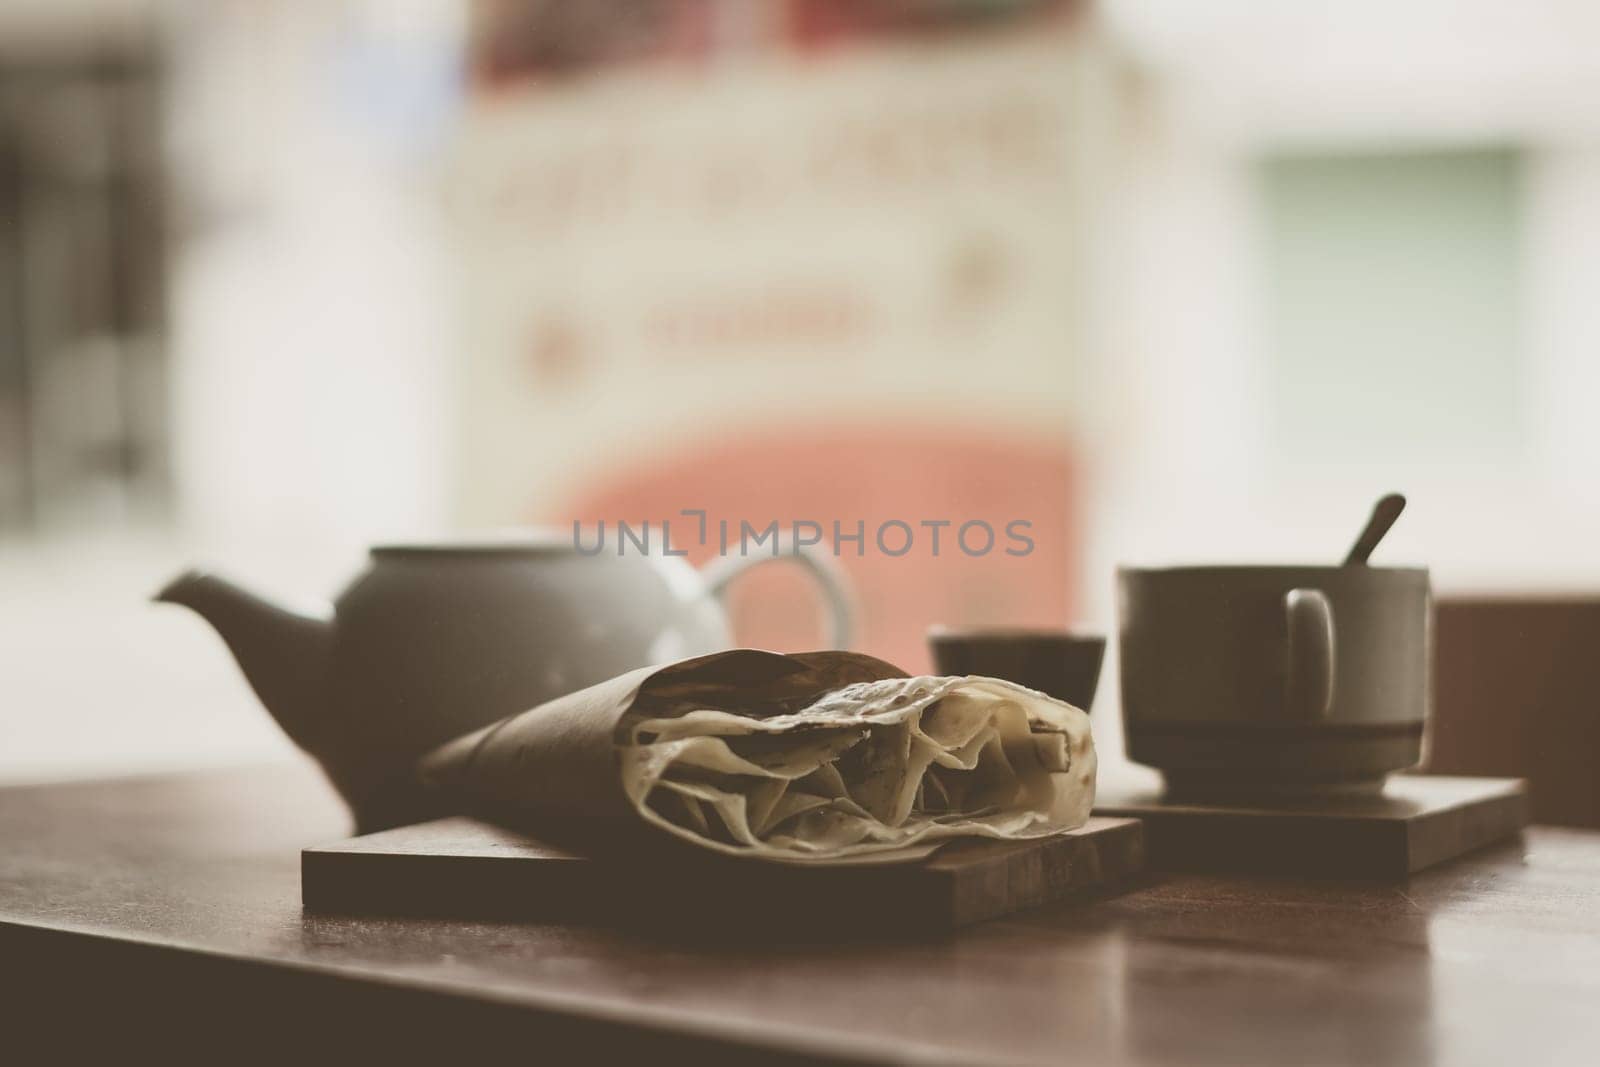 Mental warmth comfort calm silence. Breakfast cafe. Vintage matte photo. Ceramic kettle mug, large pancake on wooden board.